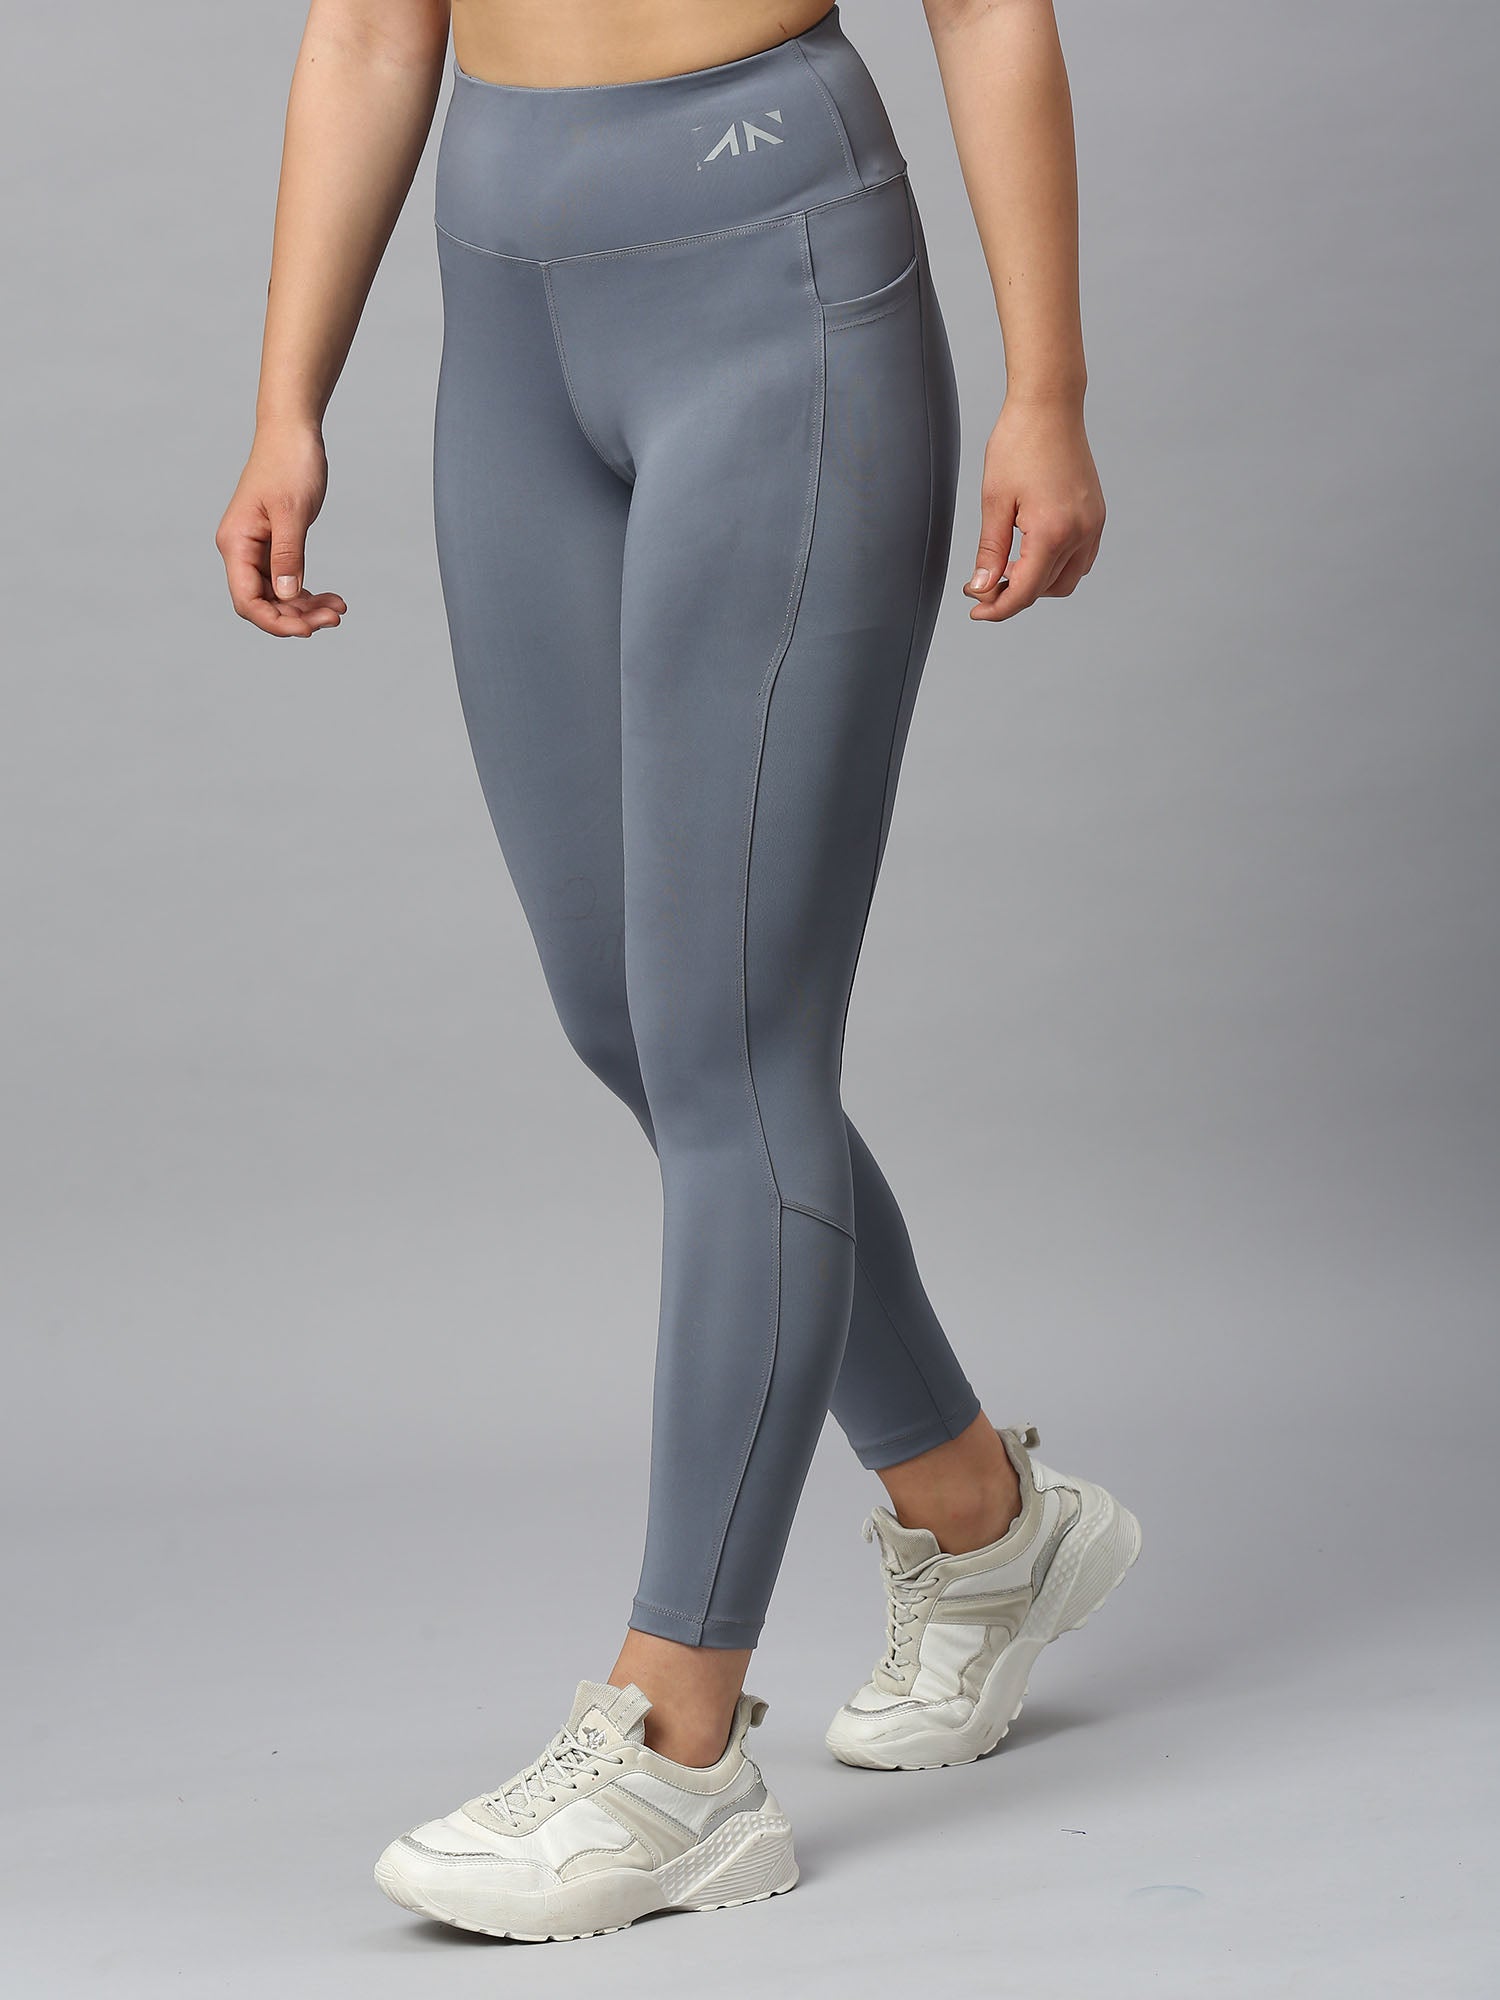 Buy Pourelle Leggings Pants - Lycra Cotton - White Online - Shop Fashion,  Accessories & Luggage on Carrefour Egypt